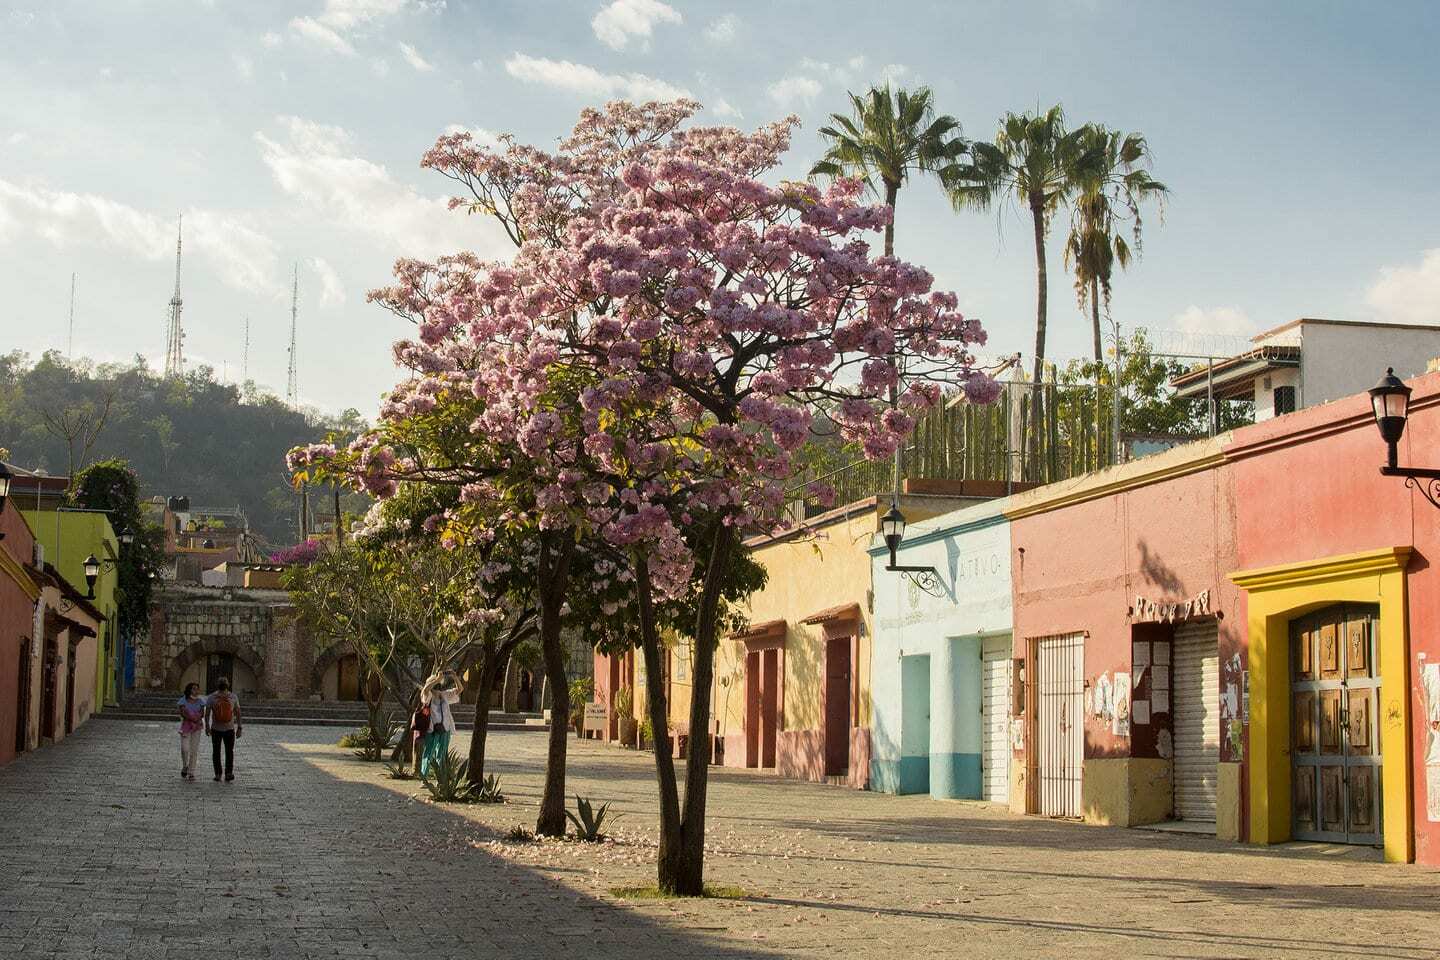 Colourful street in Oaxaca Mexico